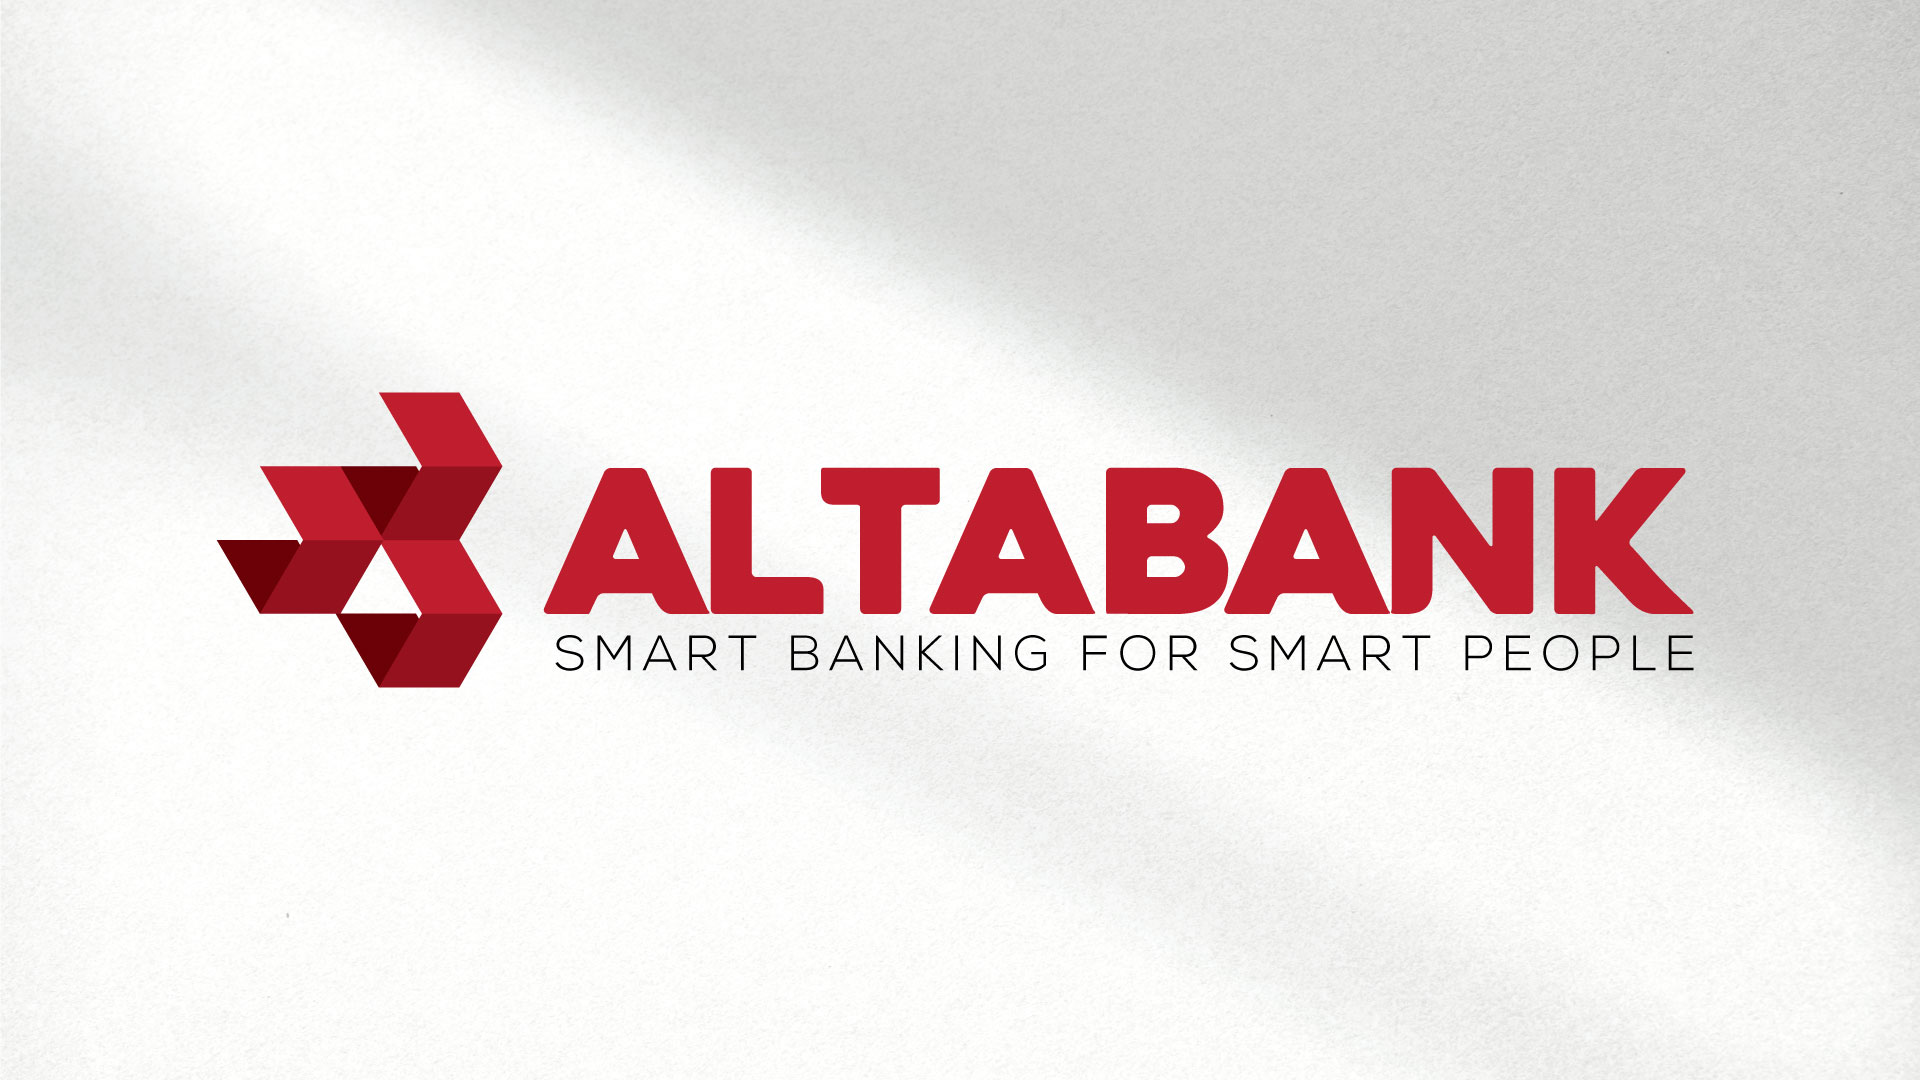 AltaBank